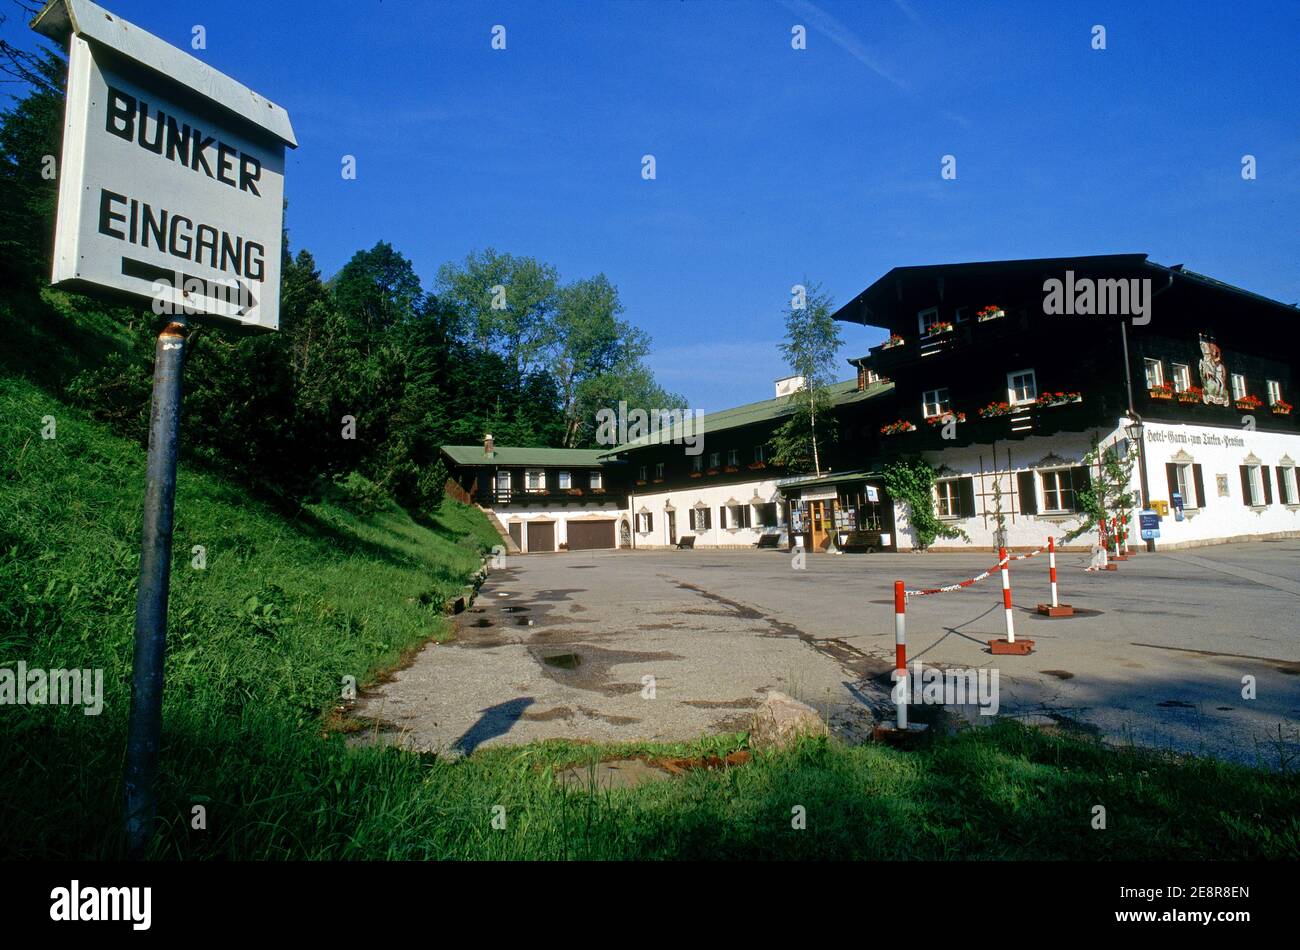 Germany/Berchtesgarden/Obersalzberg/Tourist visit eagles Nest  Bunker entrace sign . Stock Photo